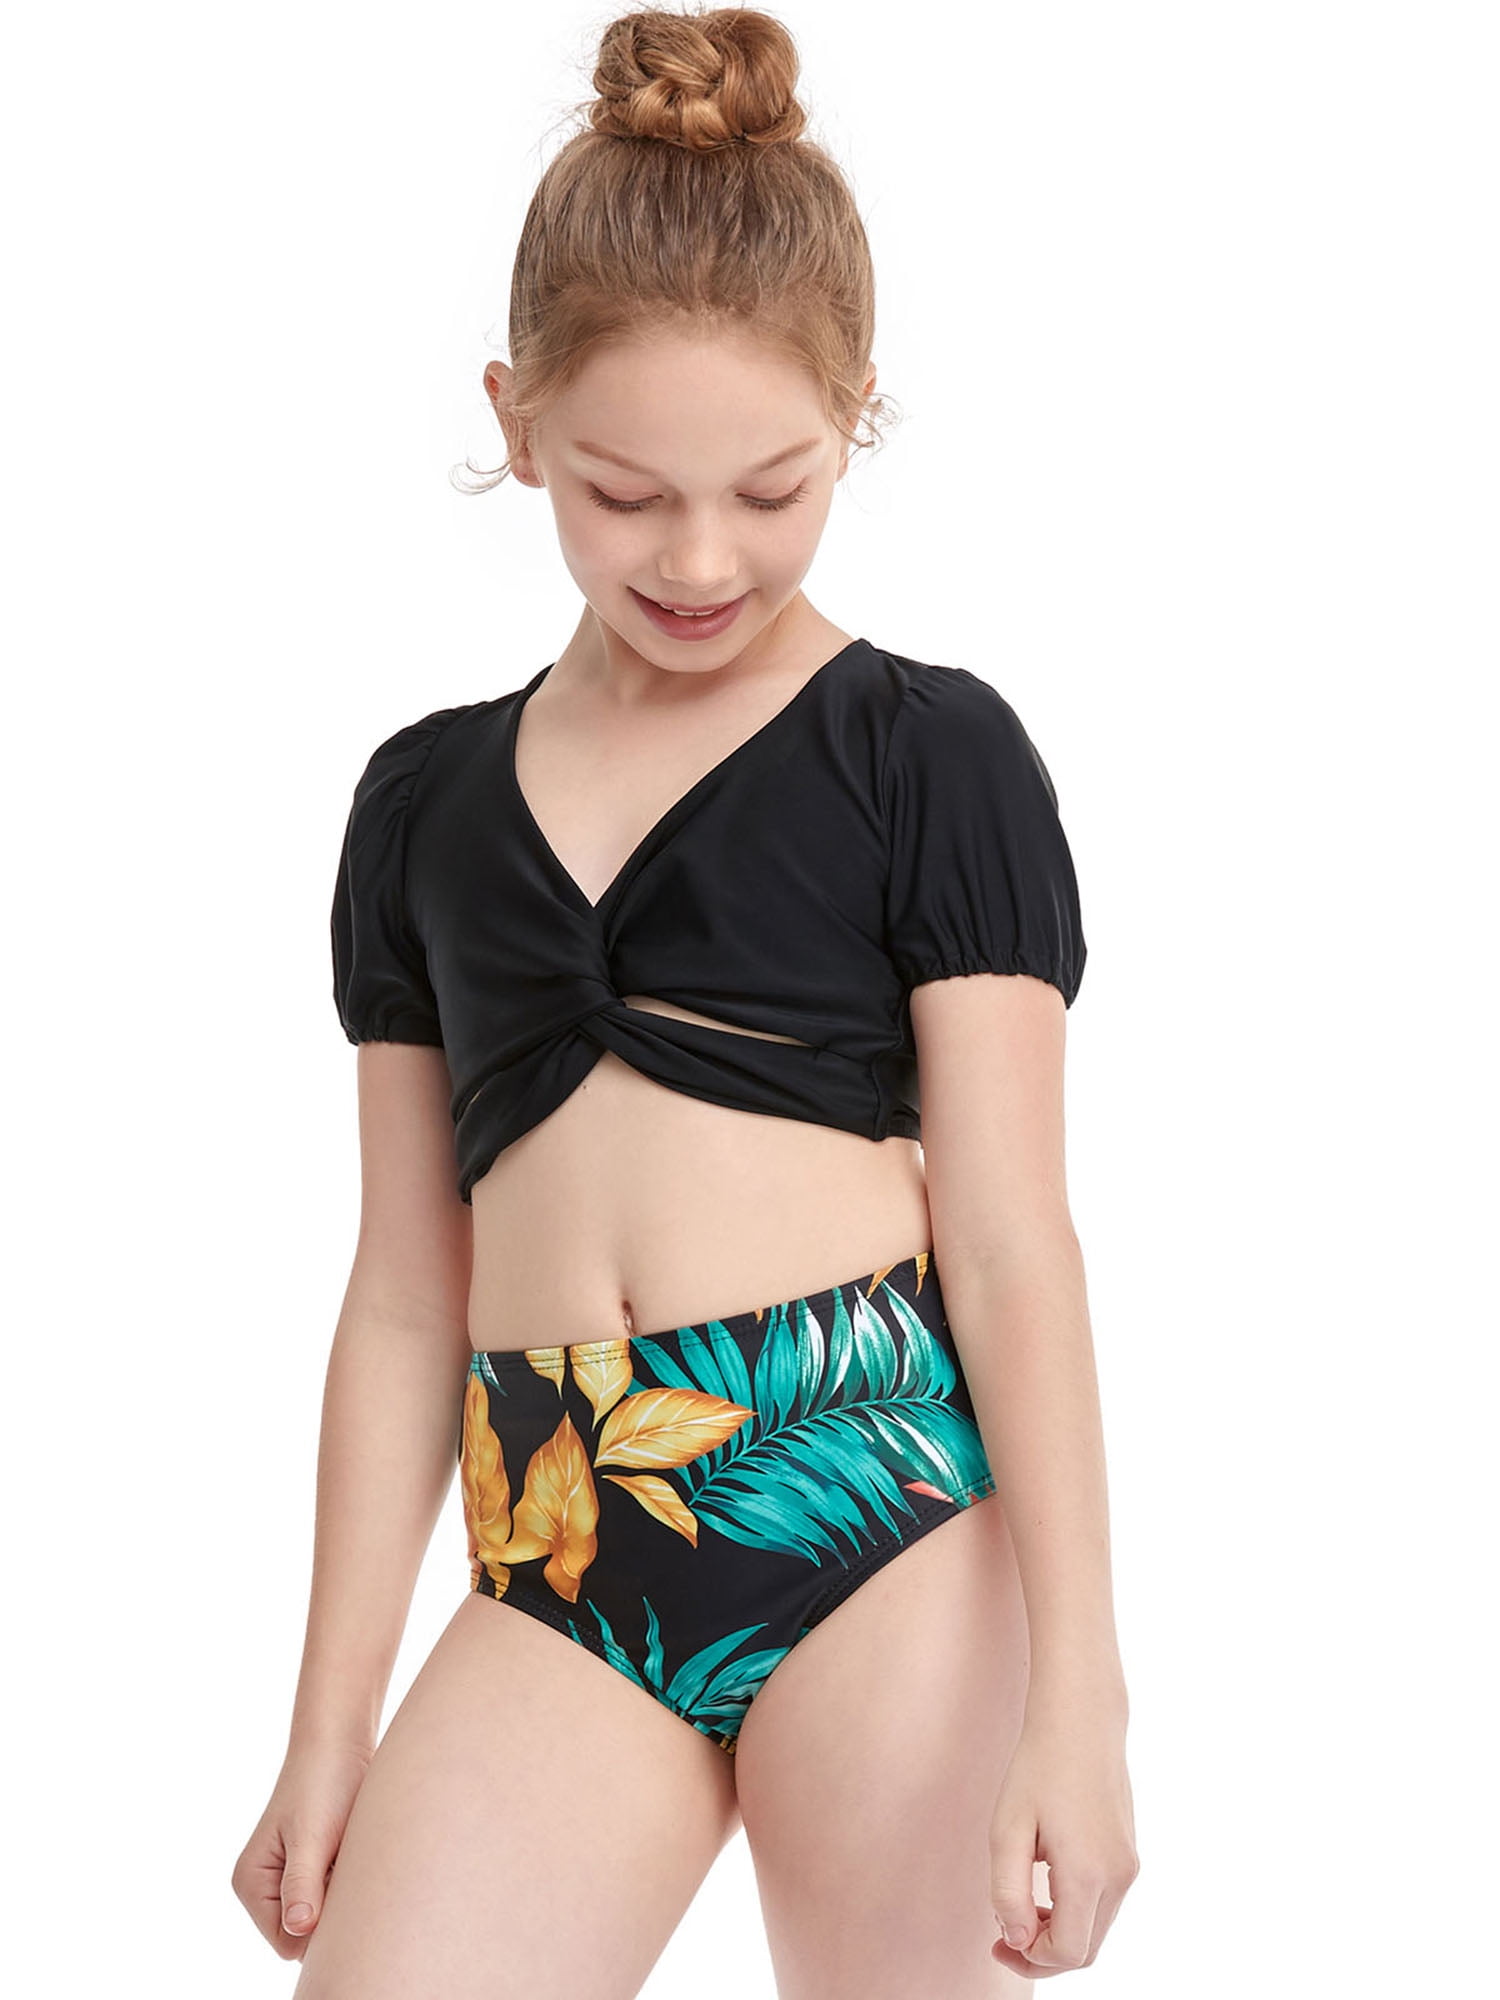 Adolife Girls Swimsuit Flounce Bikini Set 2 Piece Swimwear Mermaid Ruffle Falbala Bathing Suits 6-12 Years 